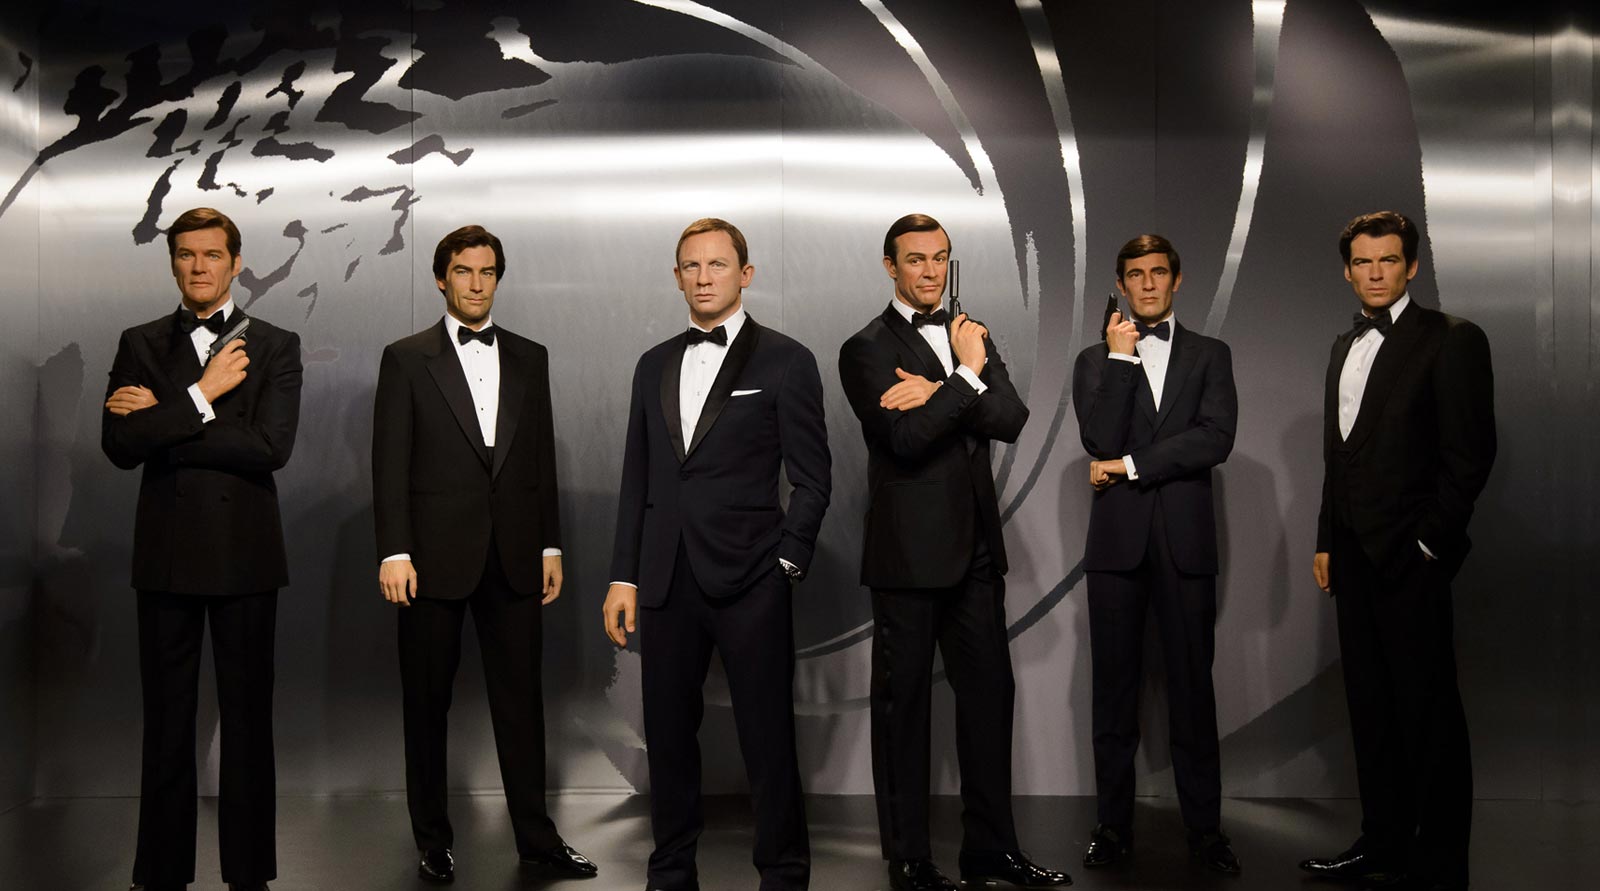 Six James Bond heroes